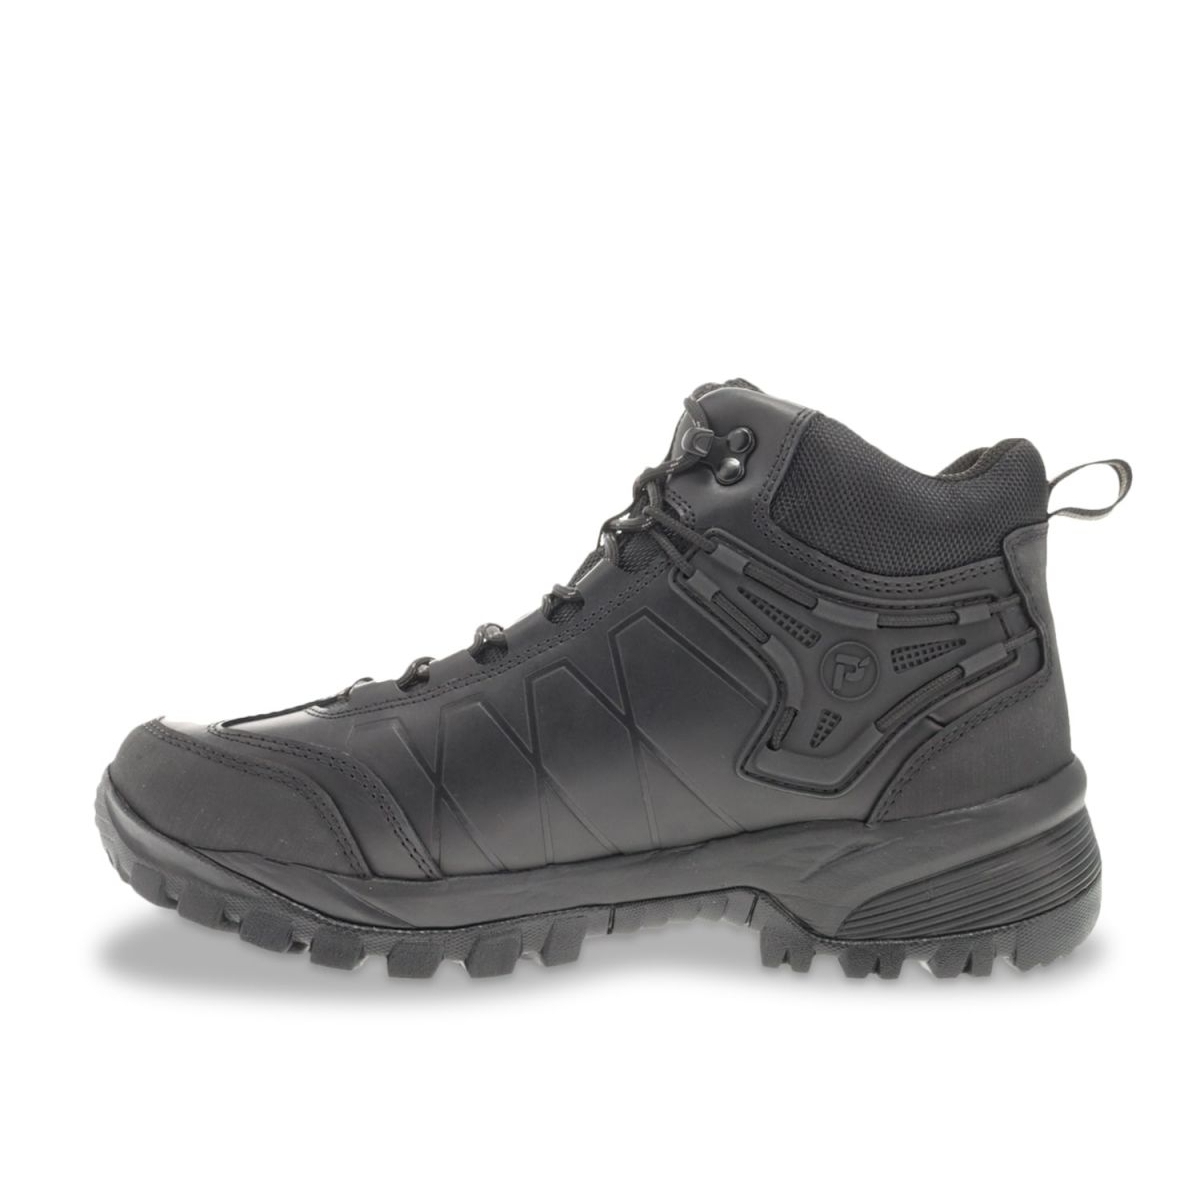 Propet Men's Ridge Walker Force Hiking Boots Black - MBA052LBLK BLACK - BLACK, 10 XX-Wide